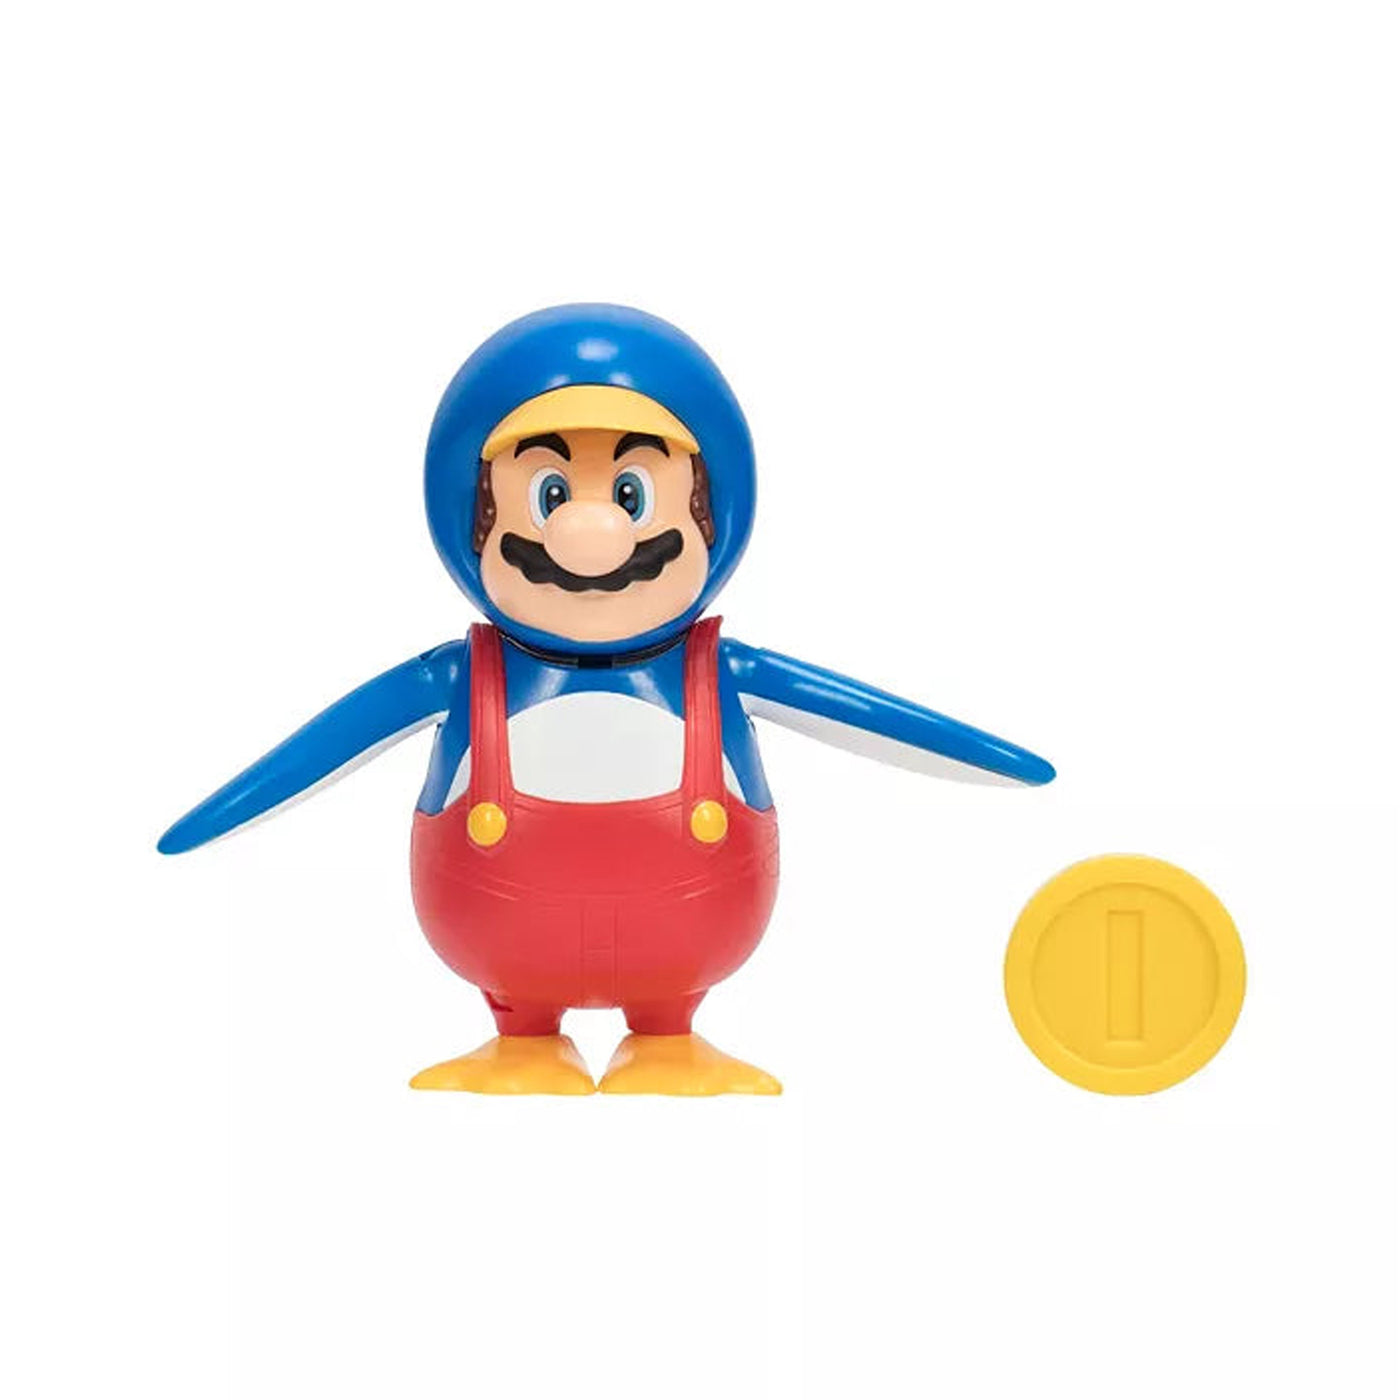 Super Mario 4 Inch Mario Penguin Figure with Coin